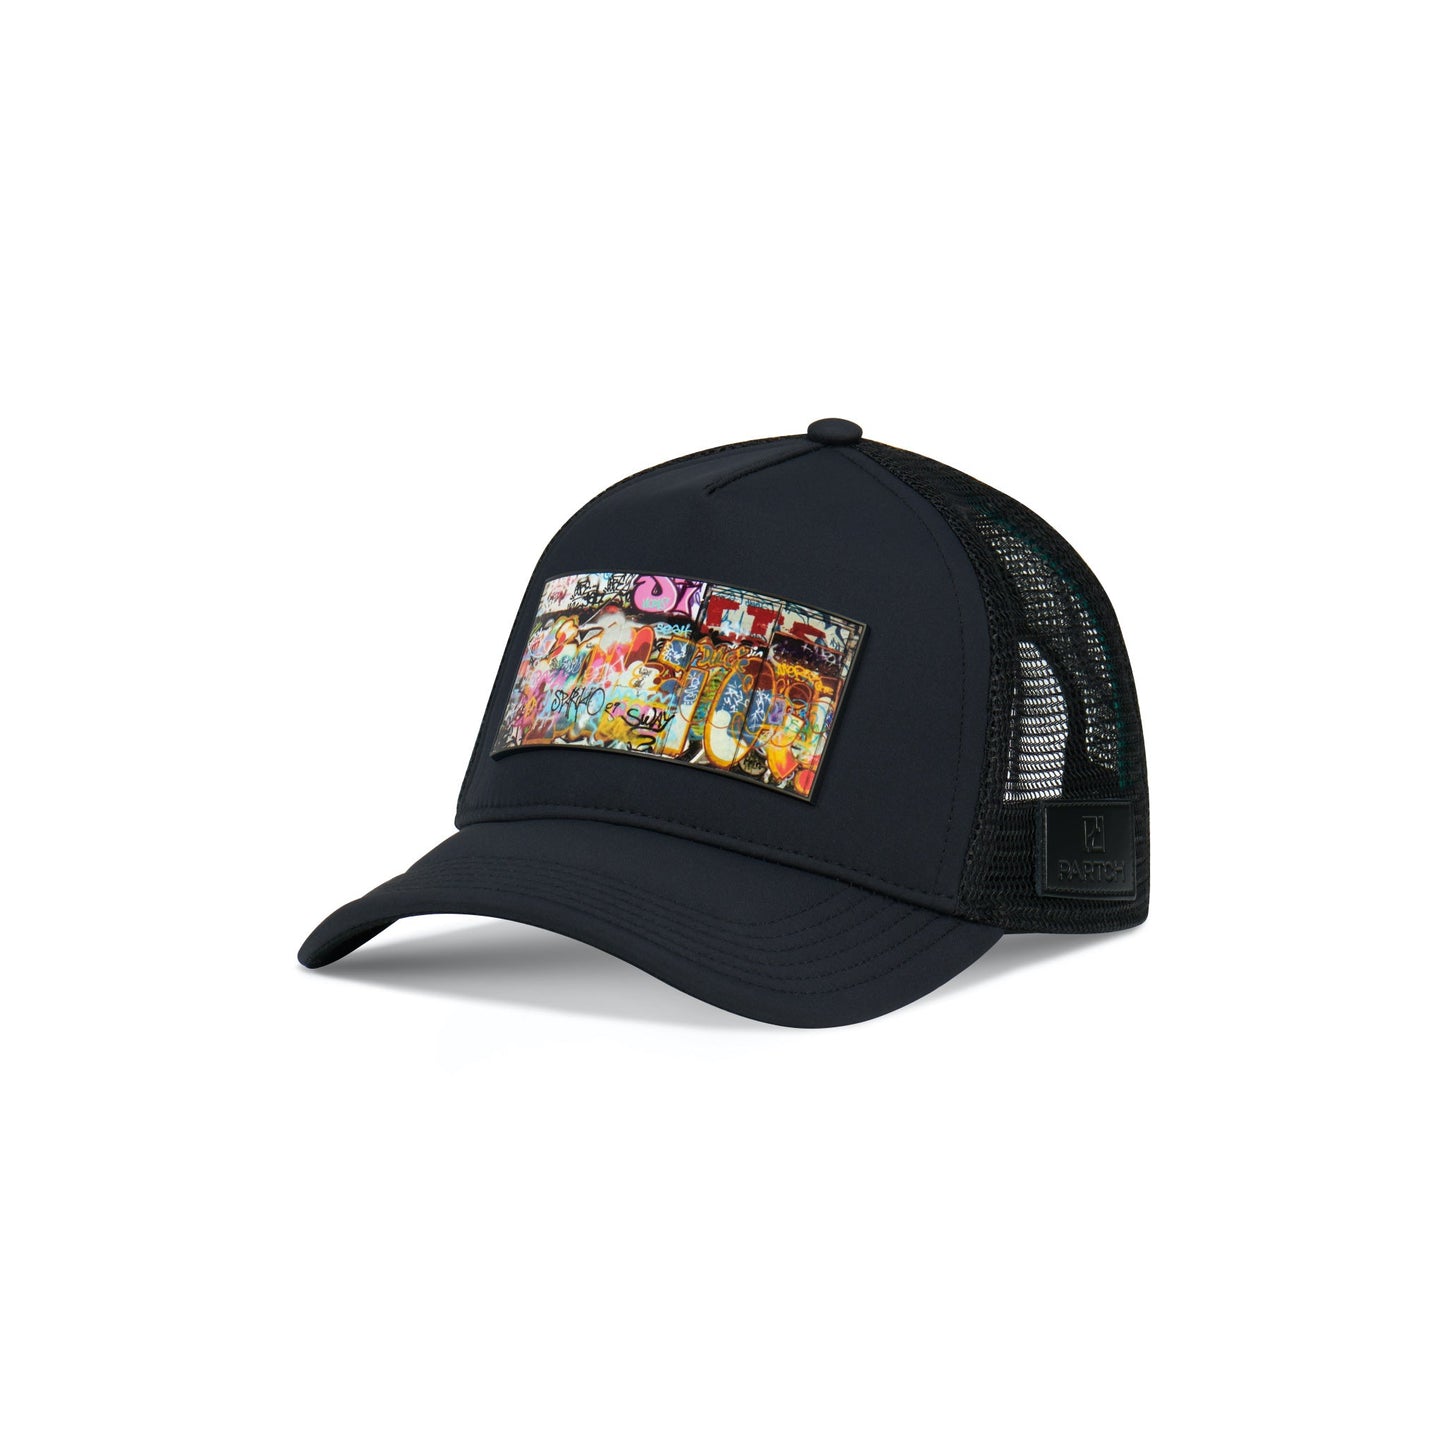 Partch Trucker Hat Black with PARTCH-Clip Dulxy Front View